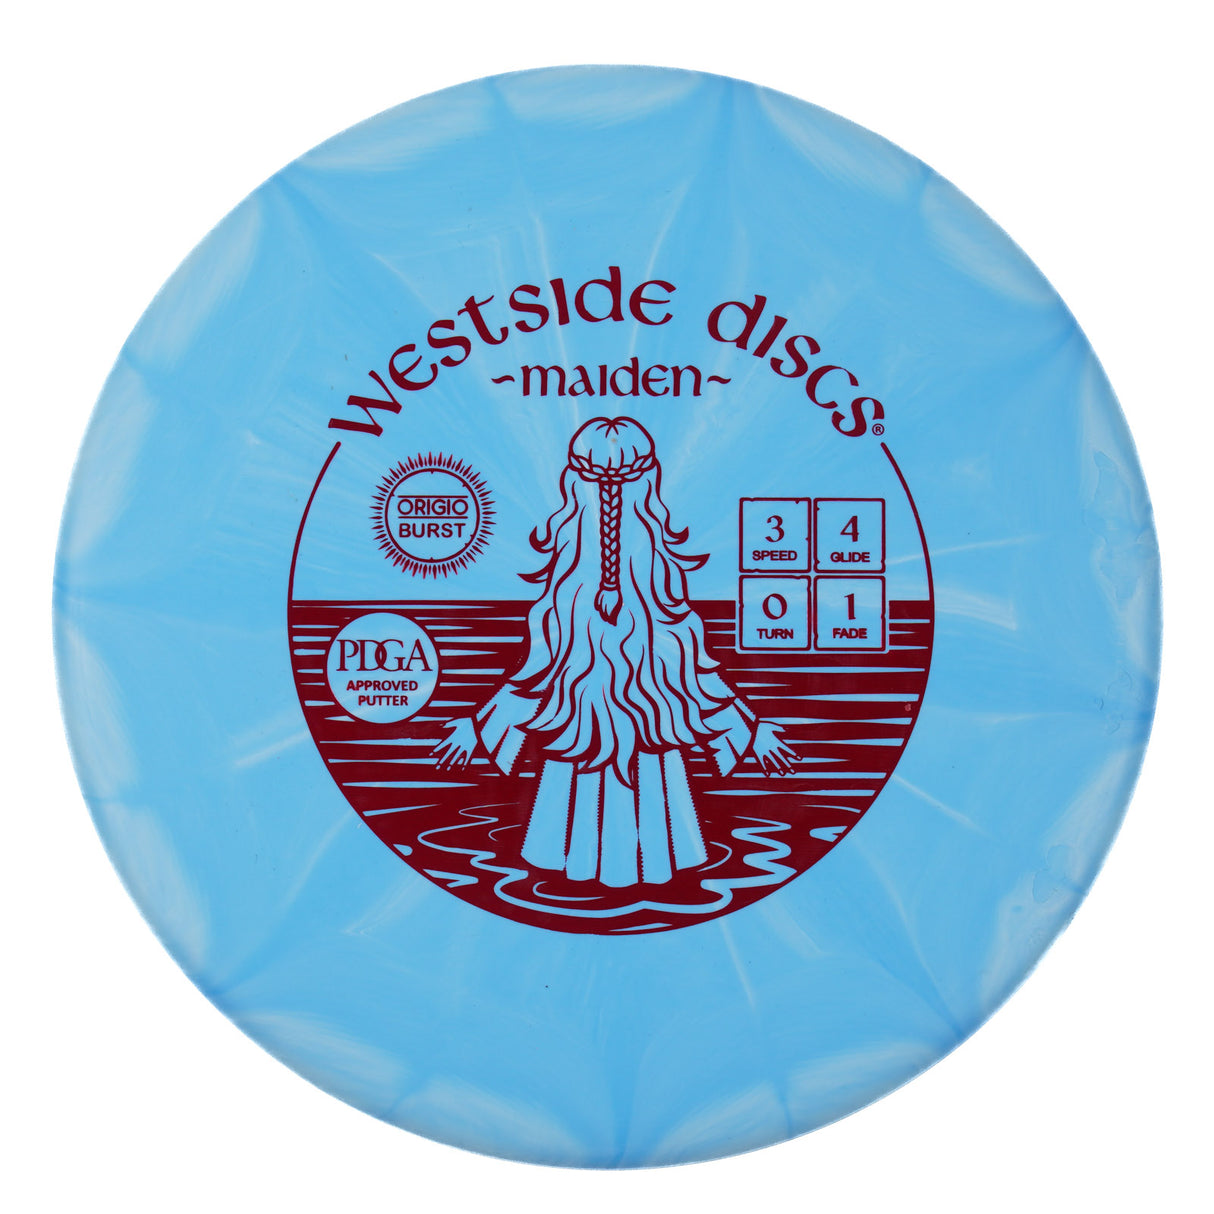 Westside Maiden - Origio Burst 175g | Style 0001